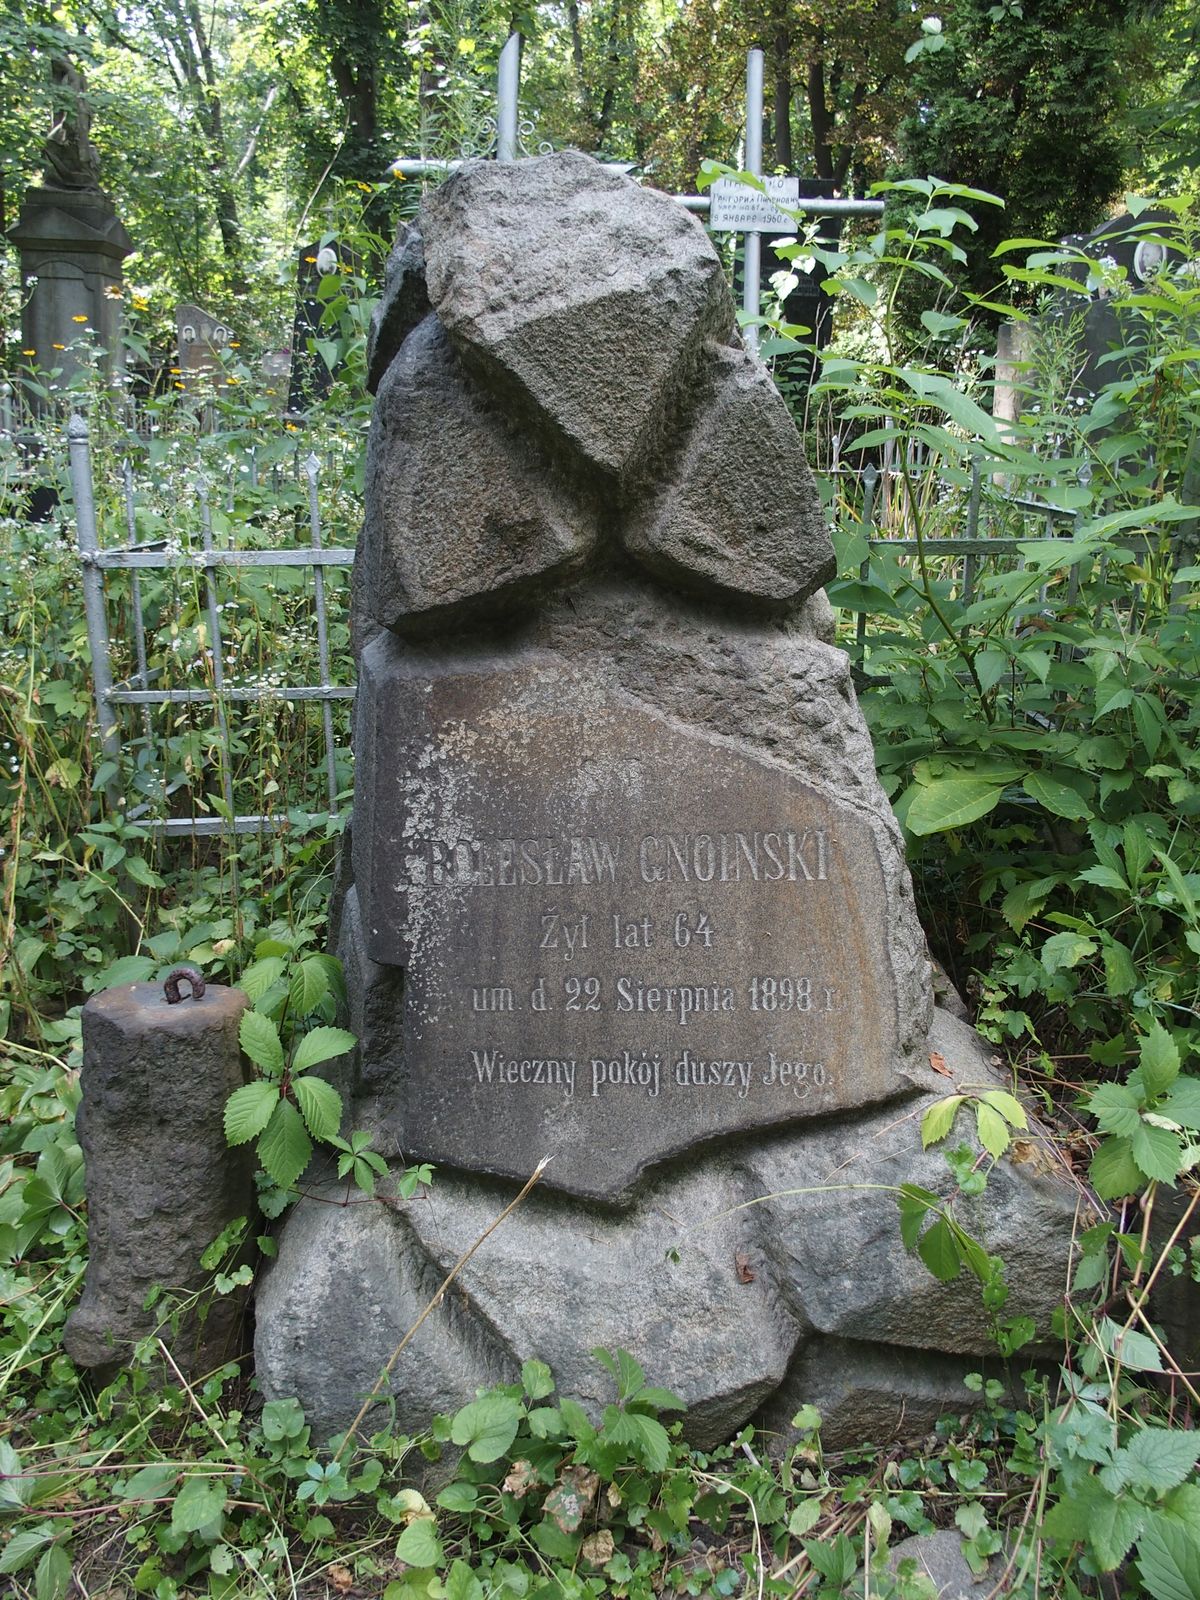 Tombstone of Boleslav Gnoinski, Baykova cemetery, Kyiv, as of 2021